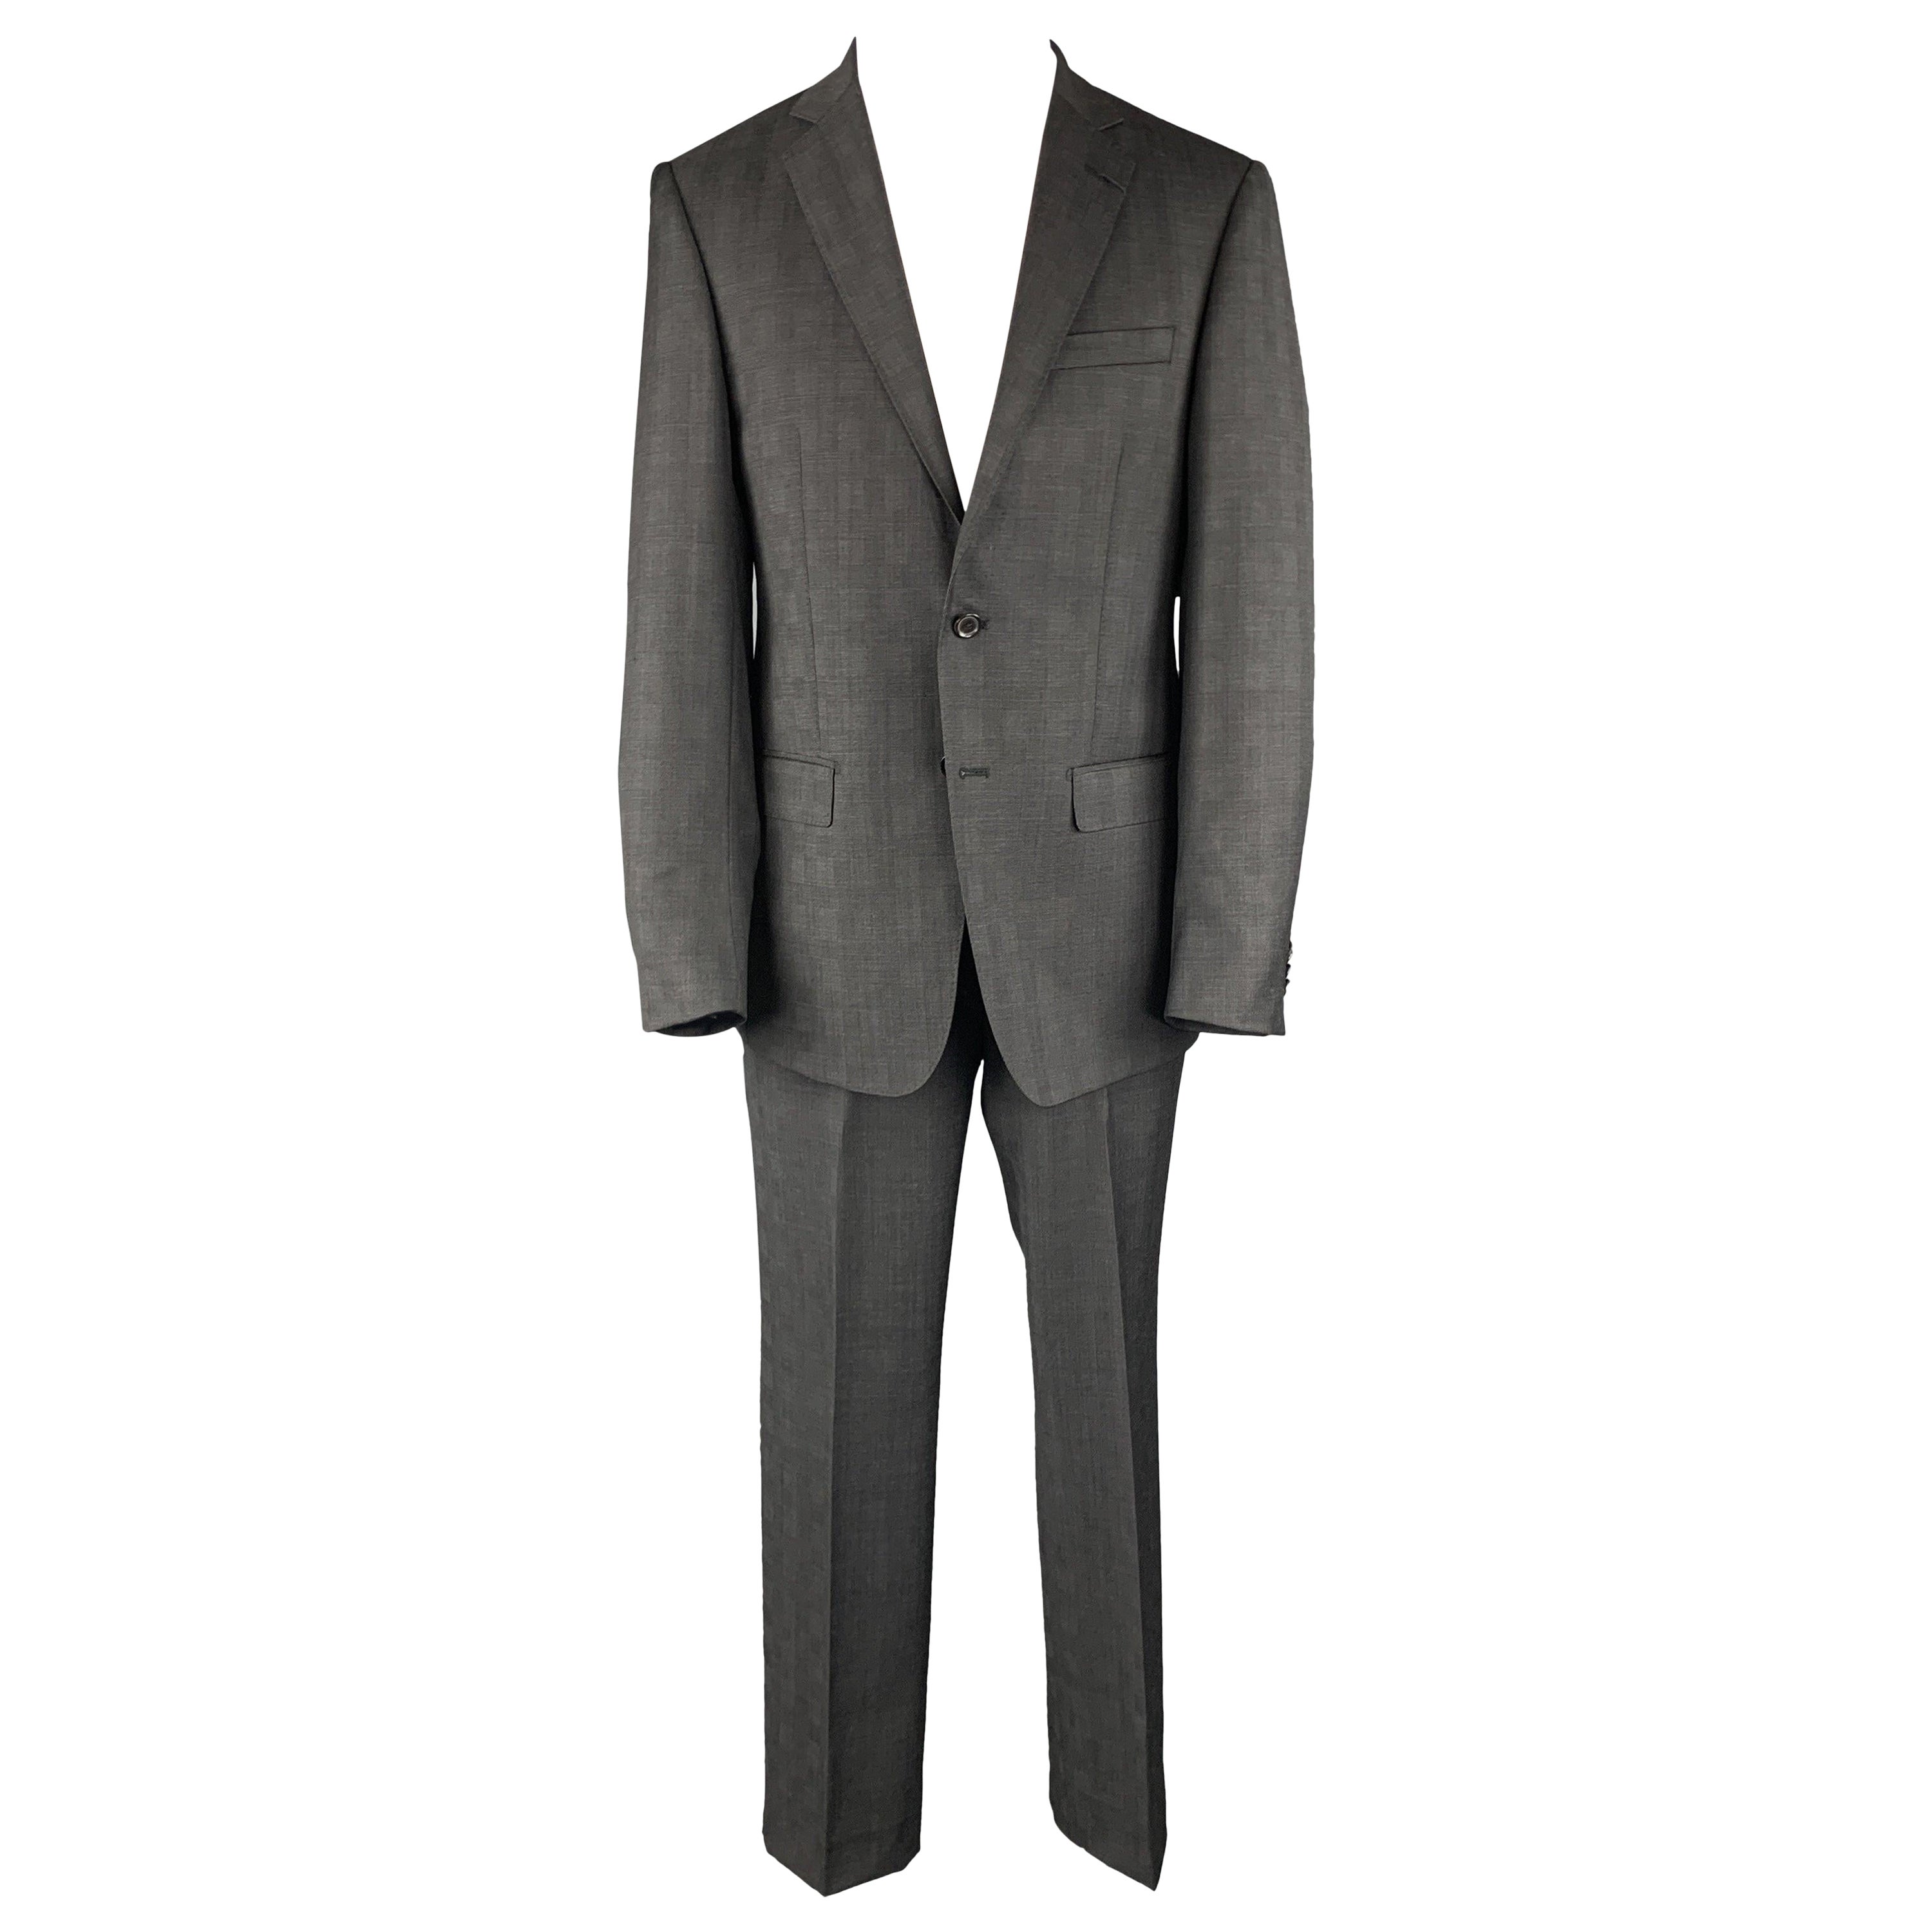 ELIE TAHARI Size 40 Charcoal Glenplaid Wool Notch Lapel Suit NWT For Sale